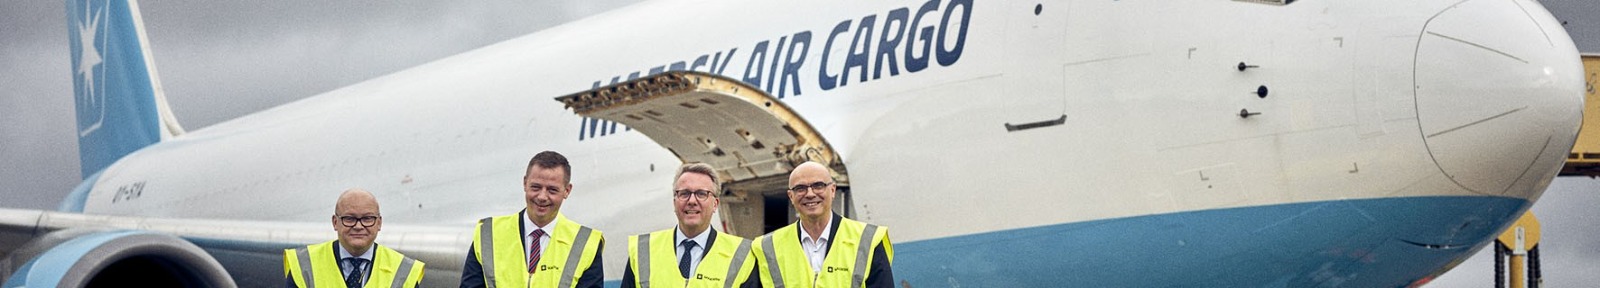 El grupo naviero Maersk inaugura servicio de carga aérea Europa-China